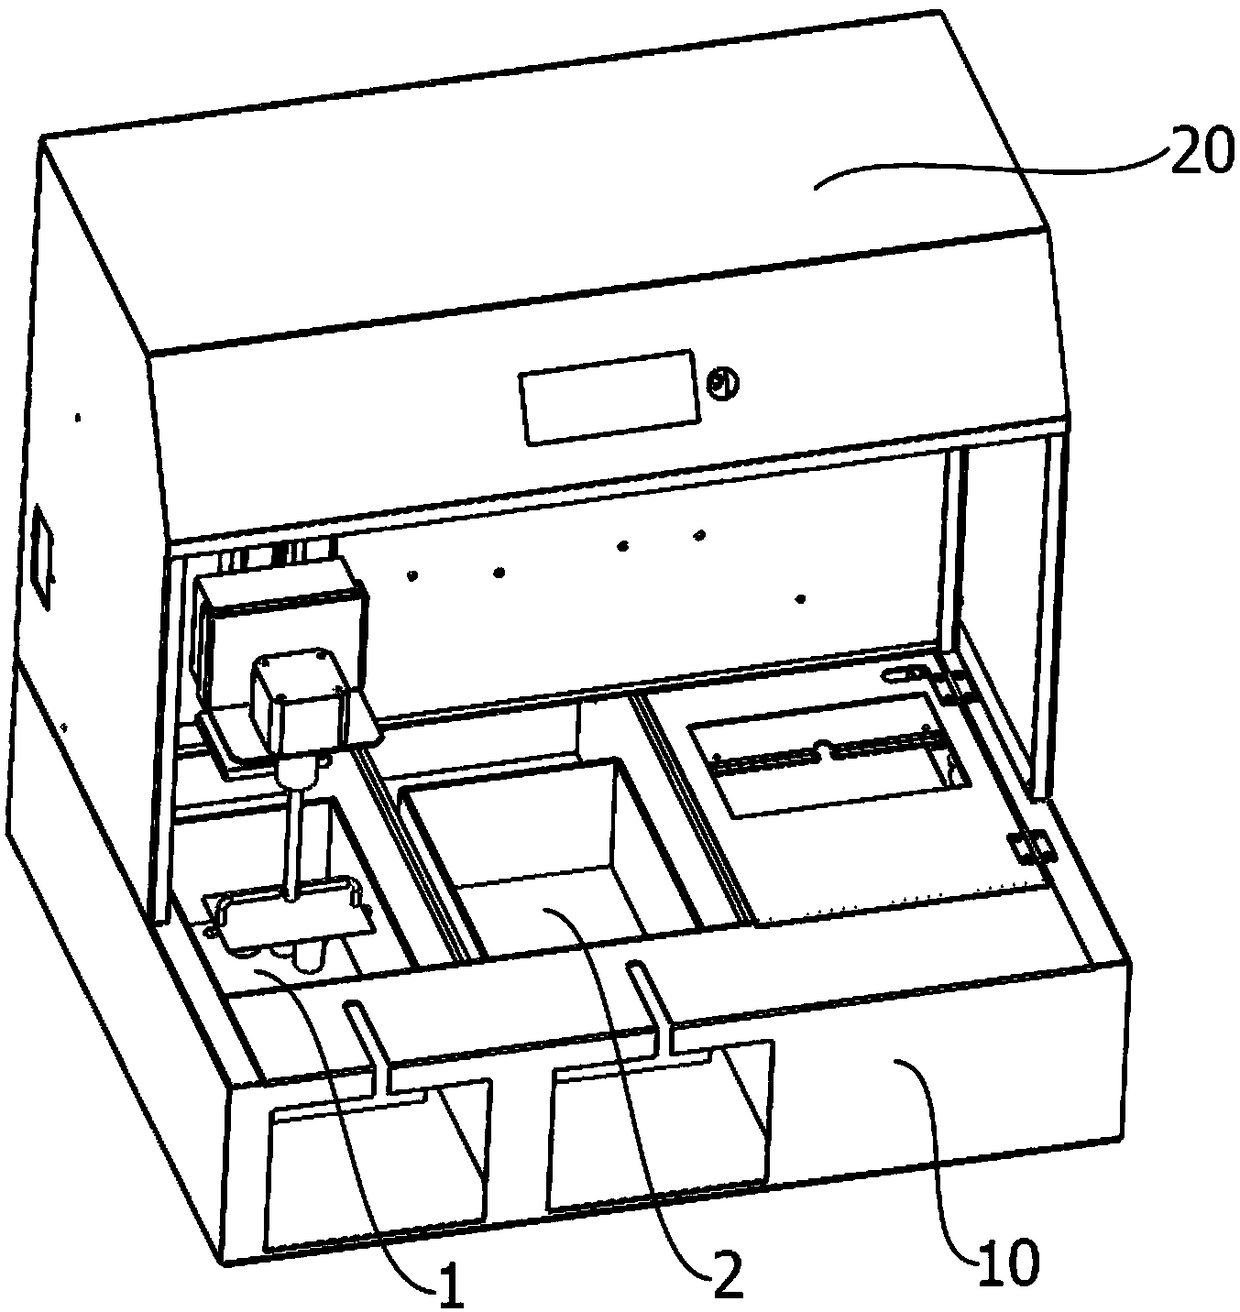 3D (three-dimensional) printing post-processing equipment